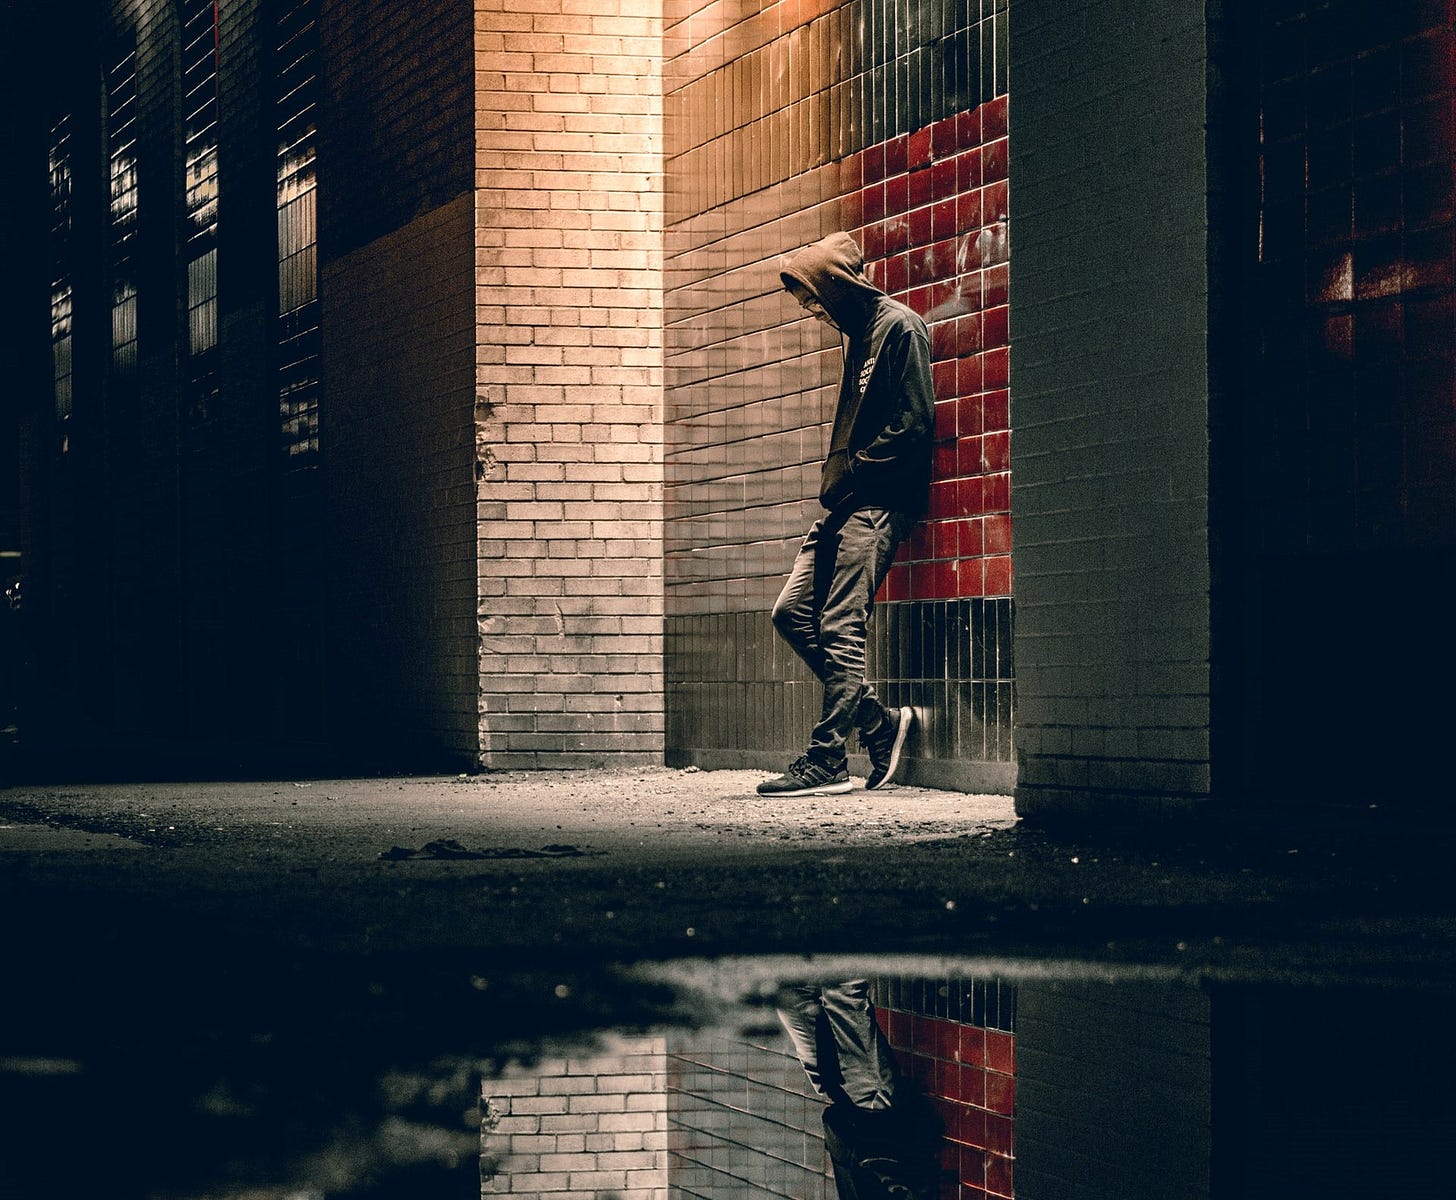 man wearing hooded sweatshirt leaning against brick building at night under spotlight